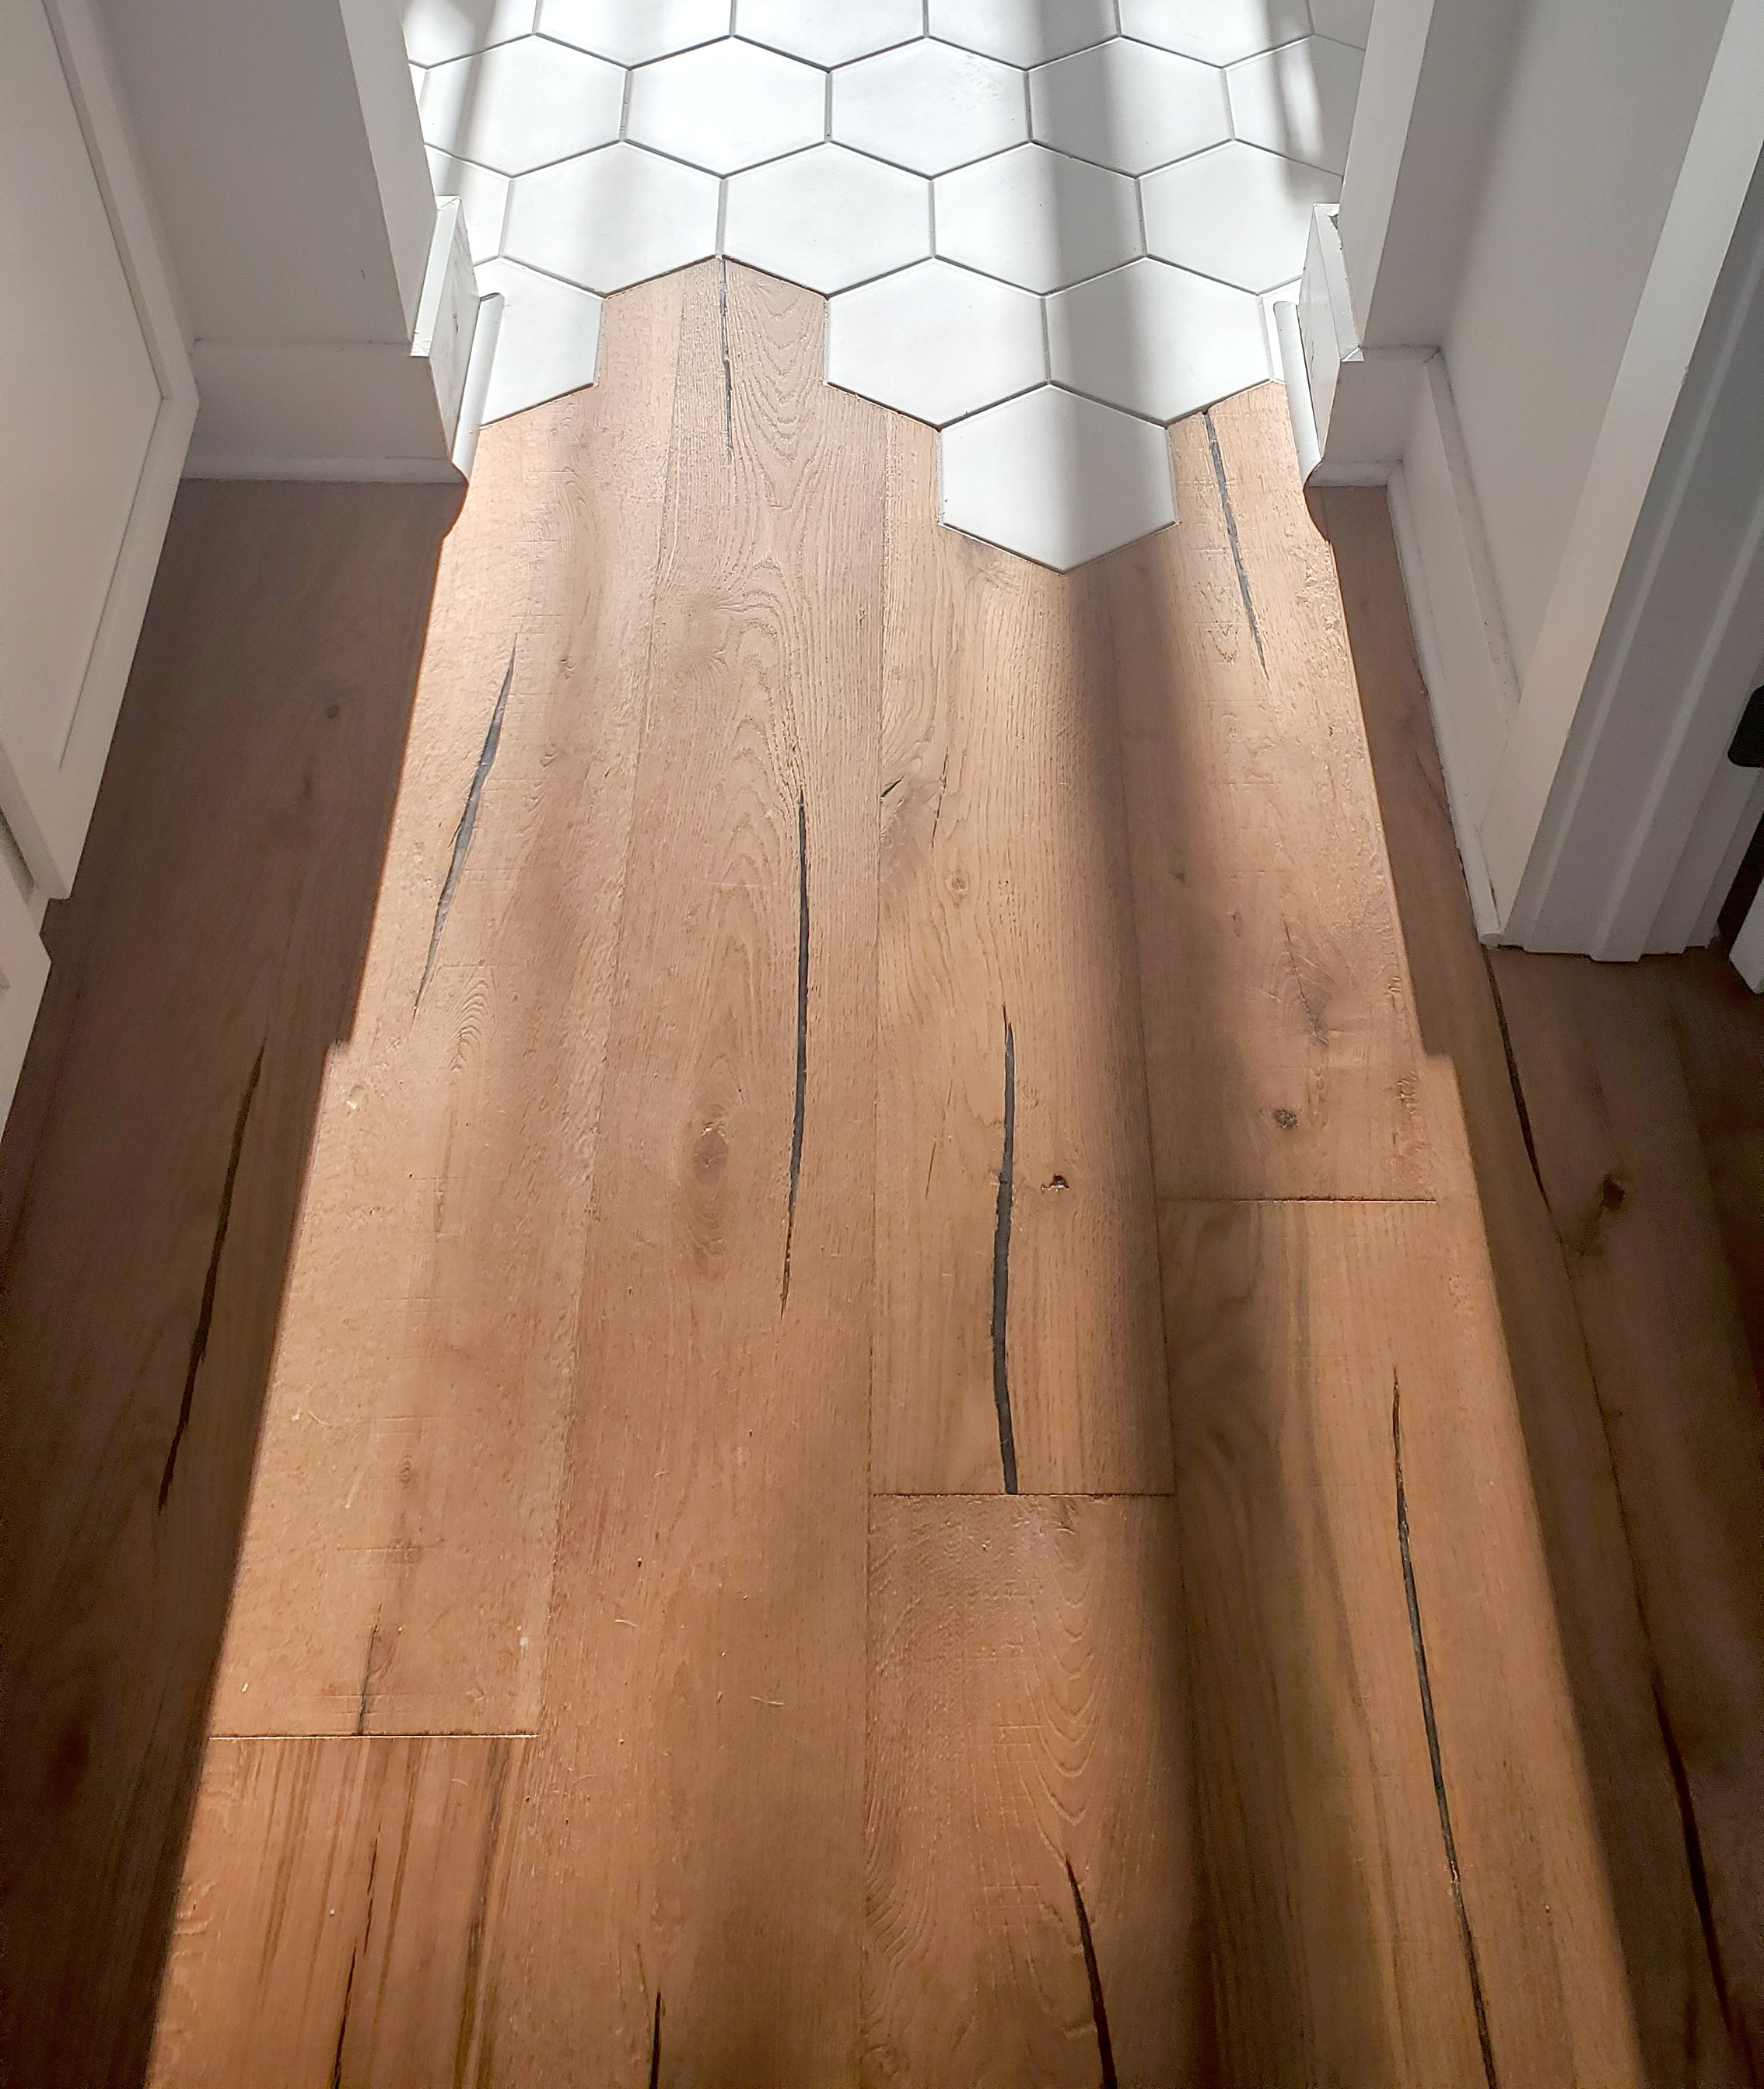 Sarasota / Venice Flooring Installation Company - Wood-35